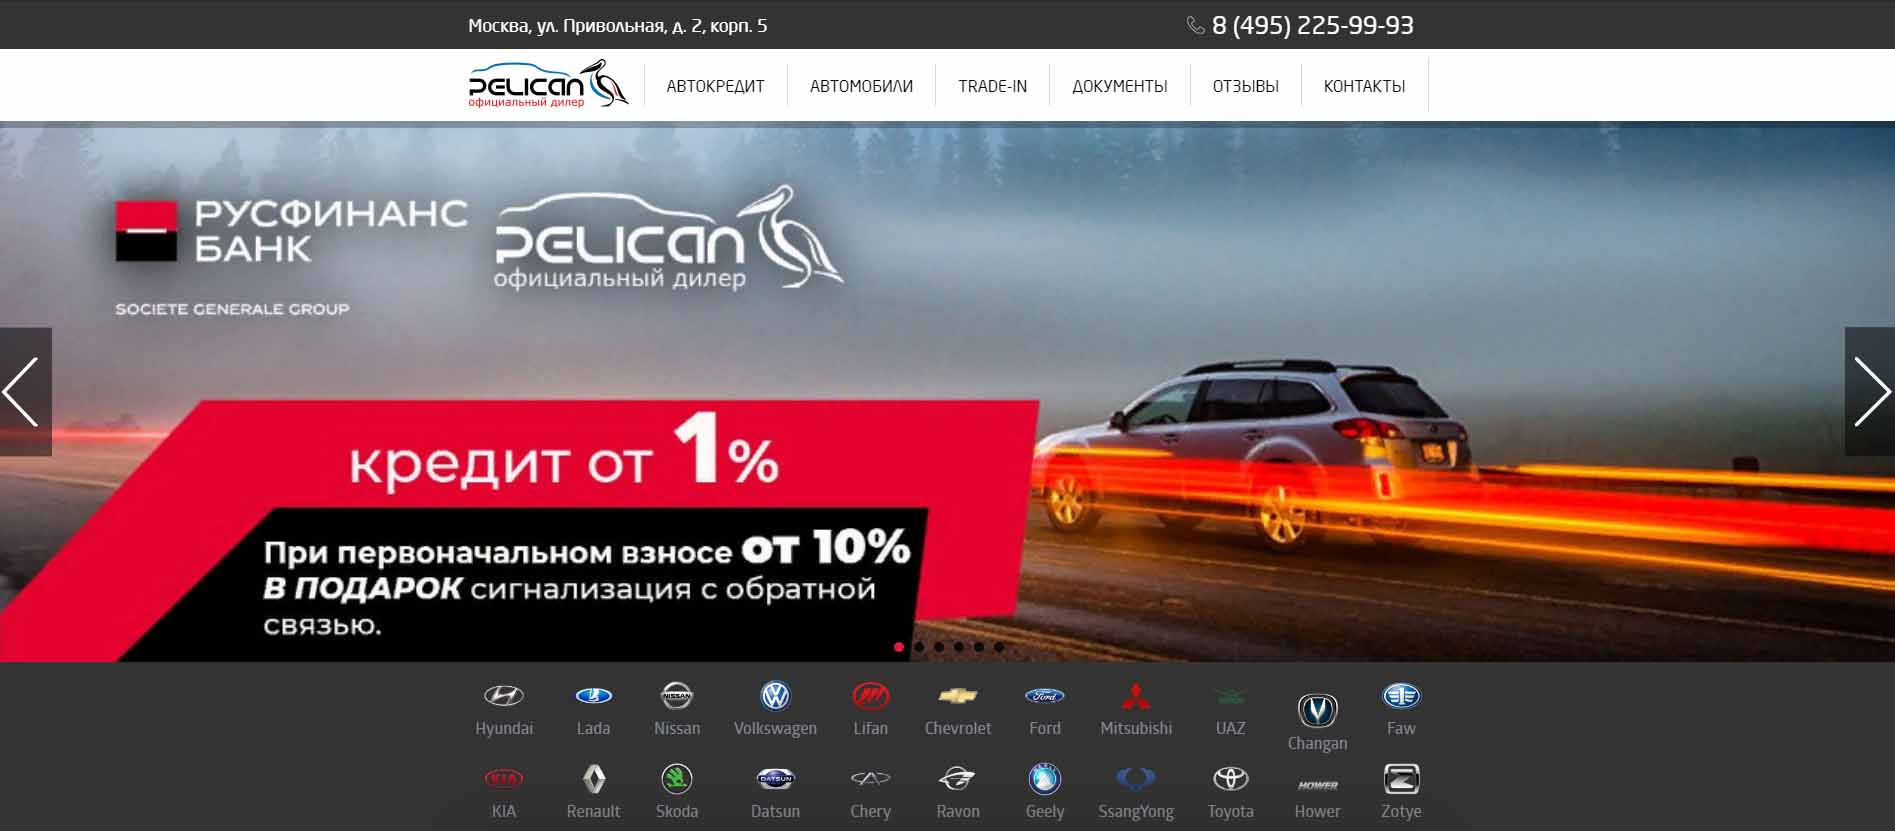 Pelican-Motors